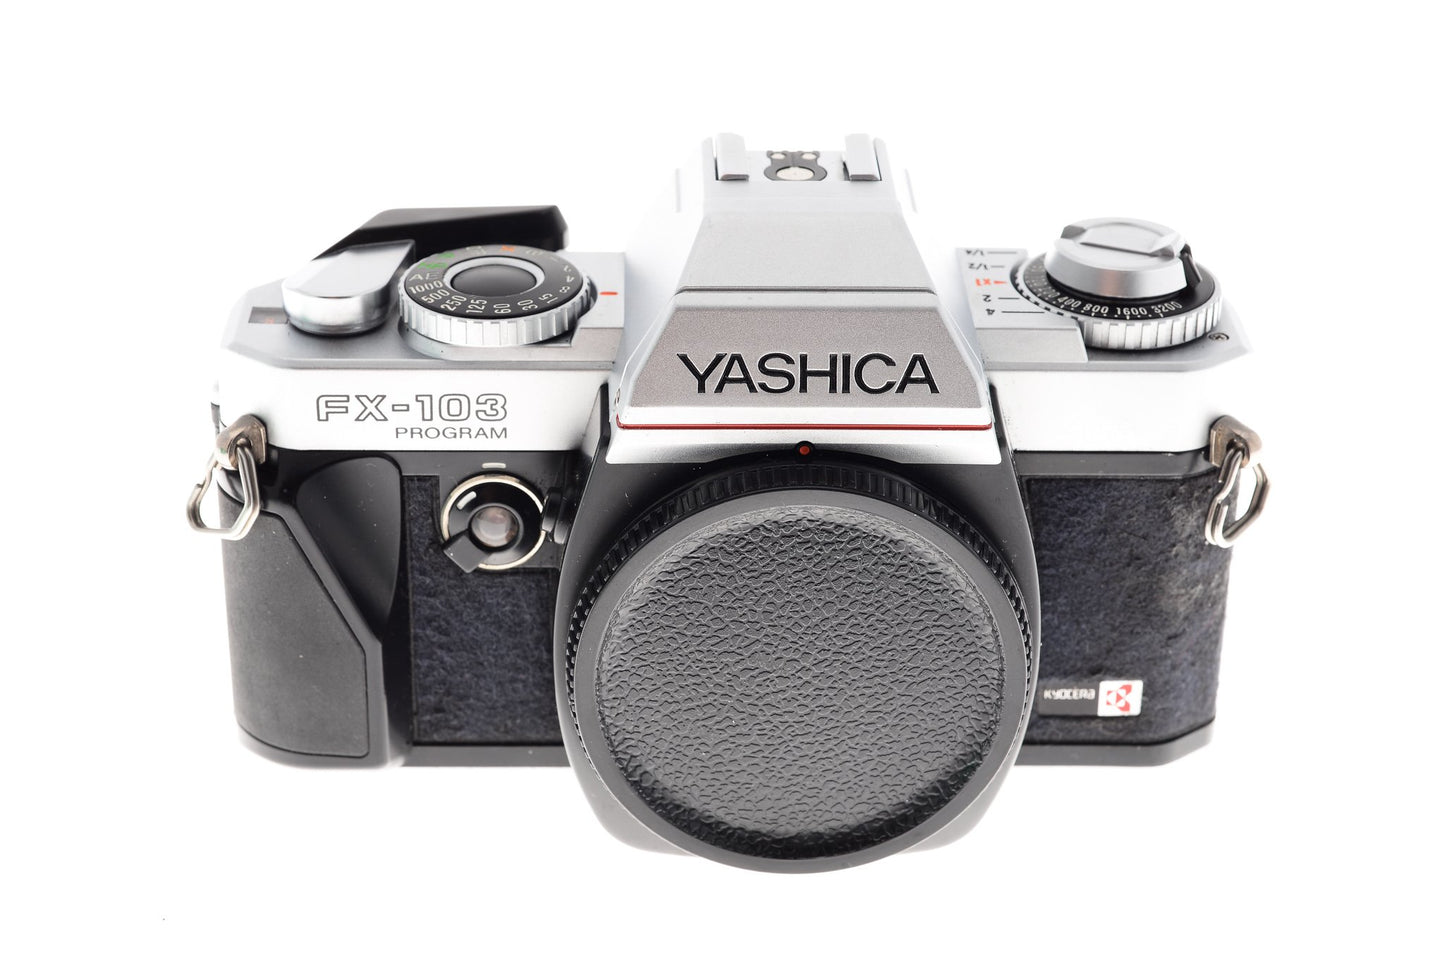 Yashica FX-103 Program - Camera